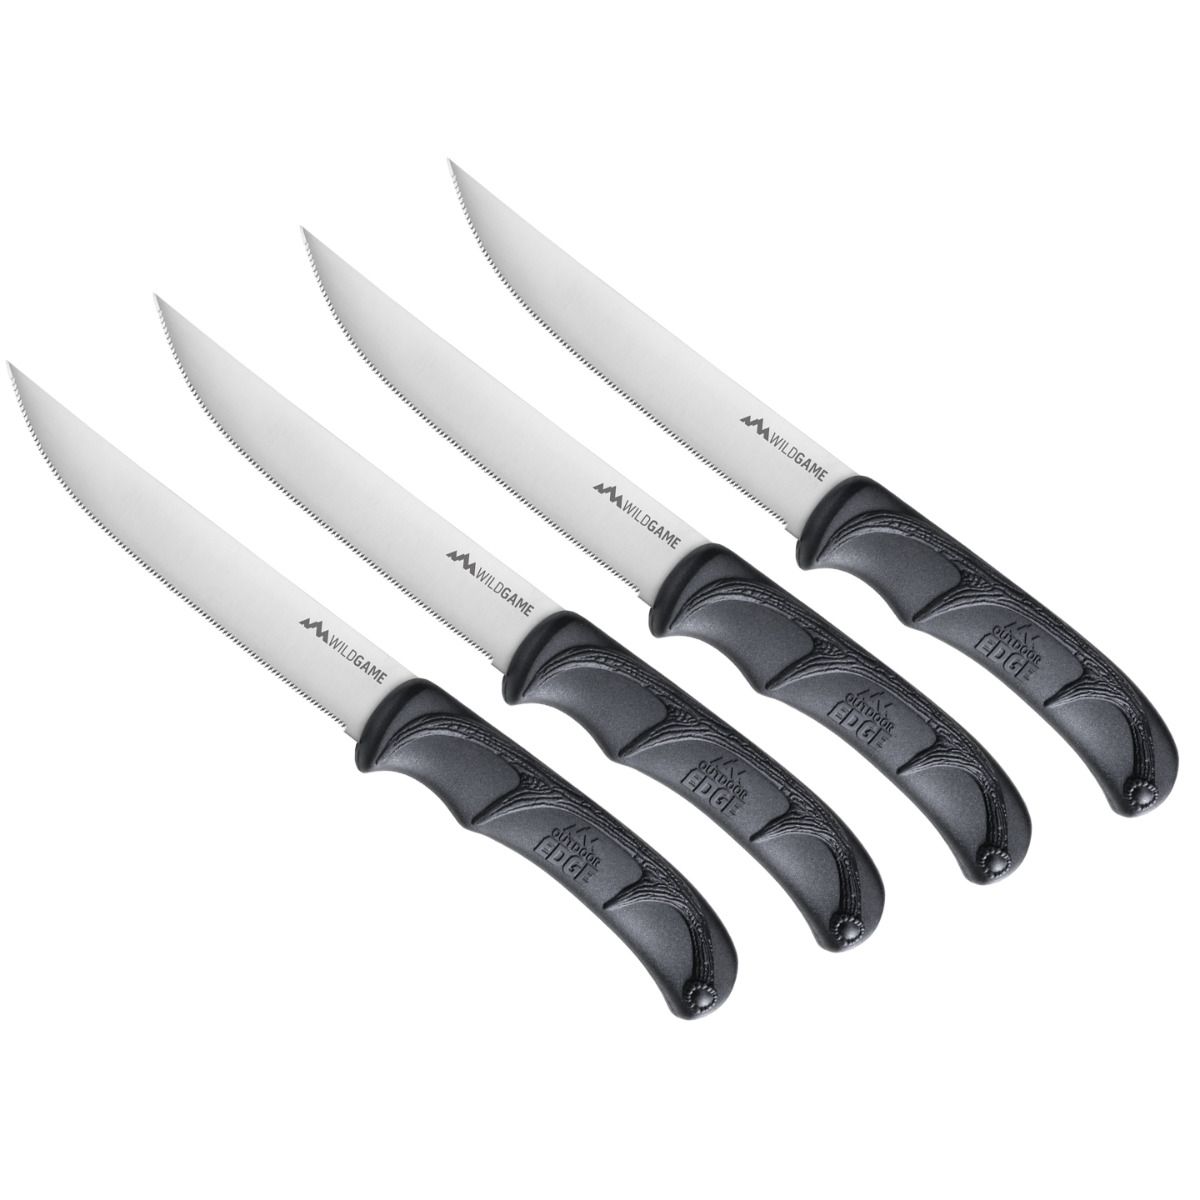 https://www.blackovis.com/media/catalog/product/cache/6c90c2de6951cb0c50711d087bd3dbd9/o/u/outdoor-edge-wildgame-steak-knife-set---black.jpg